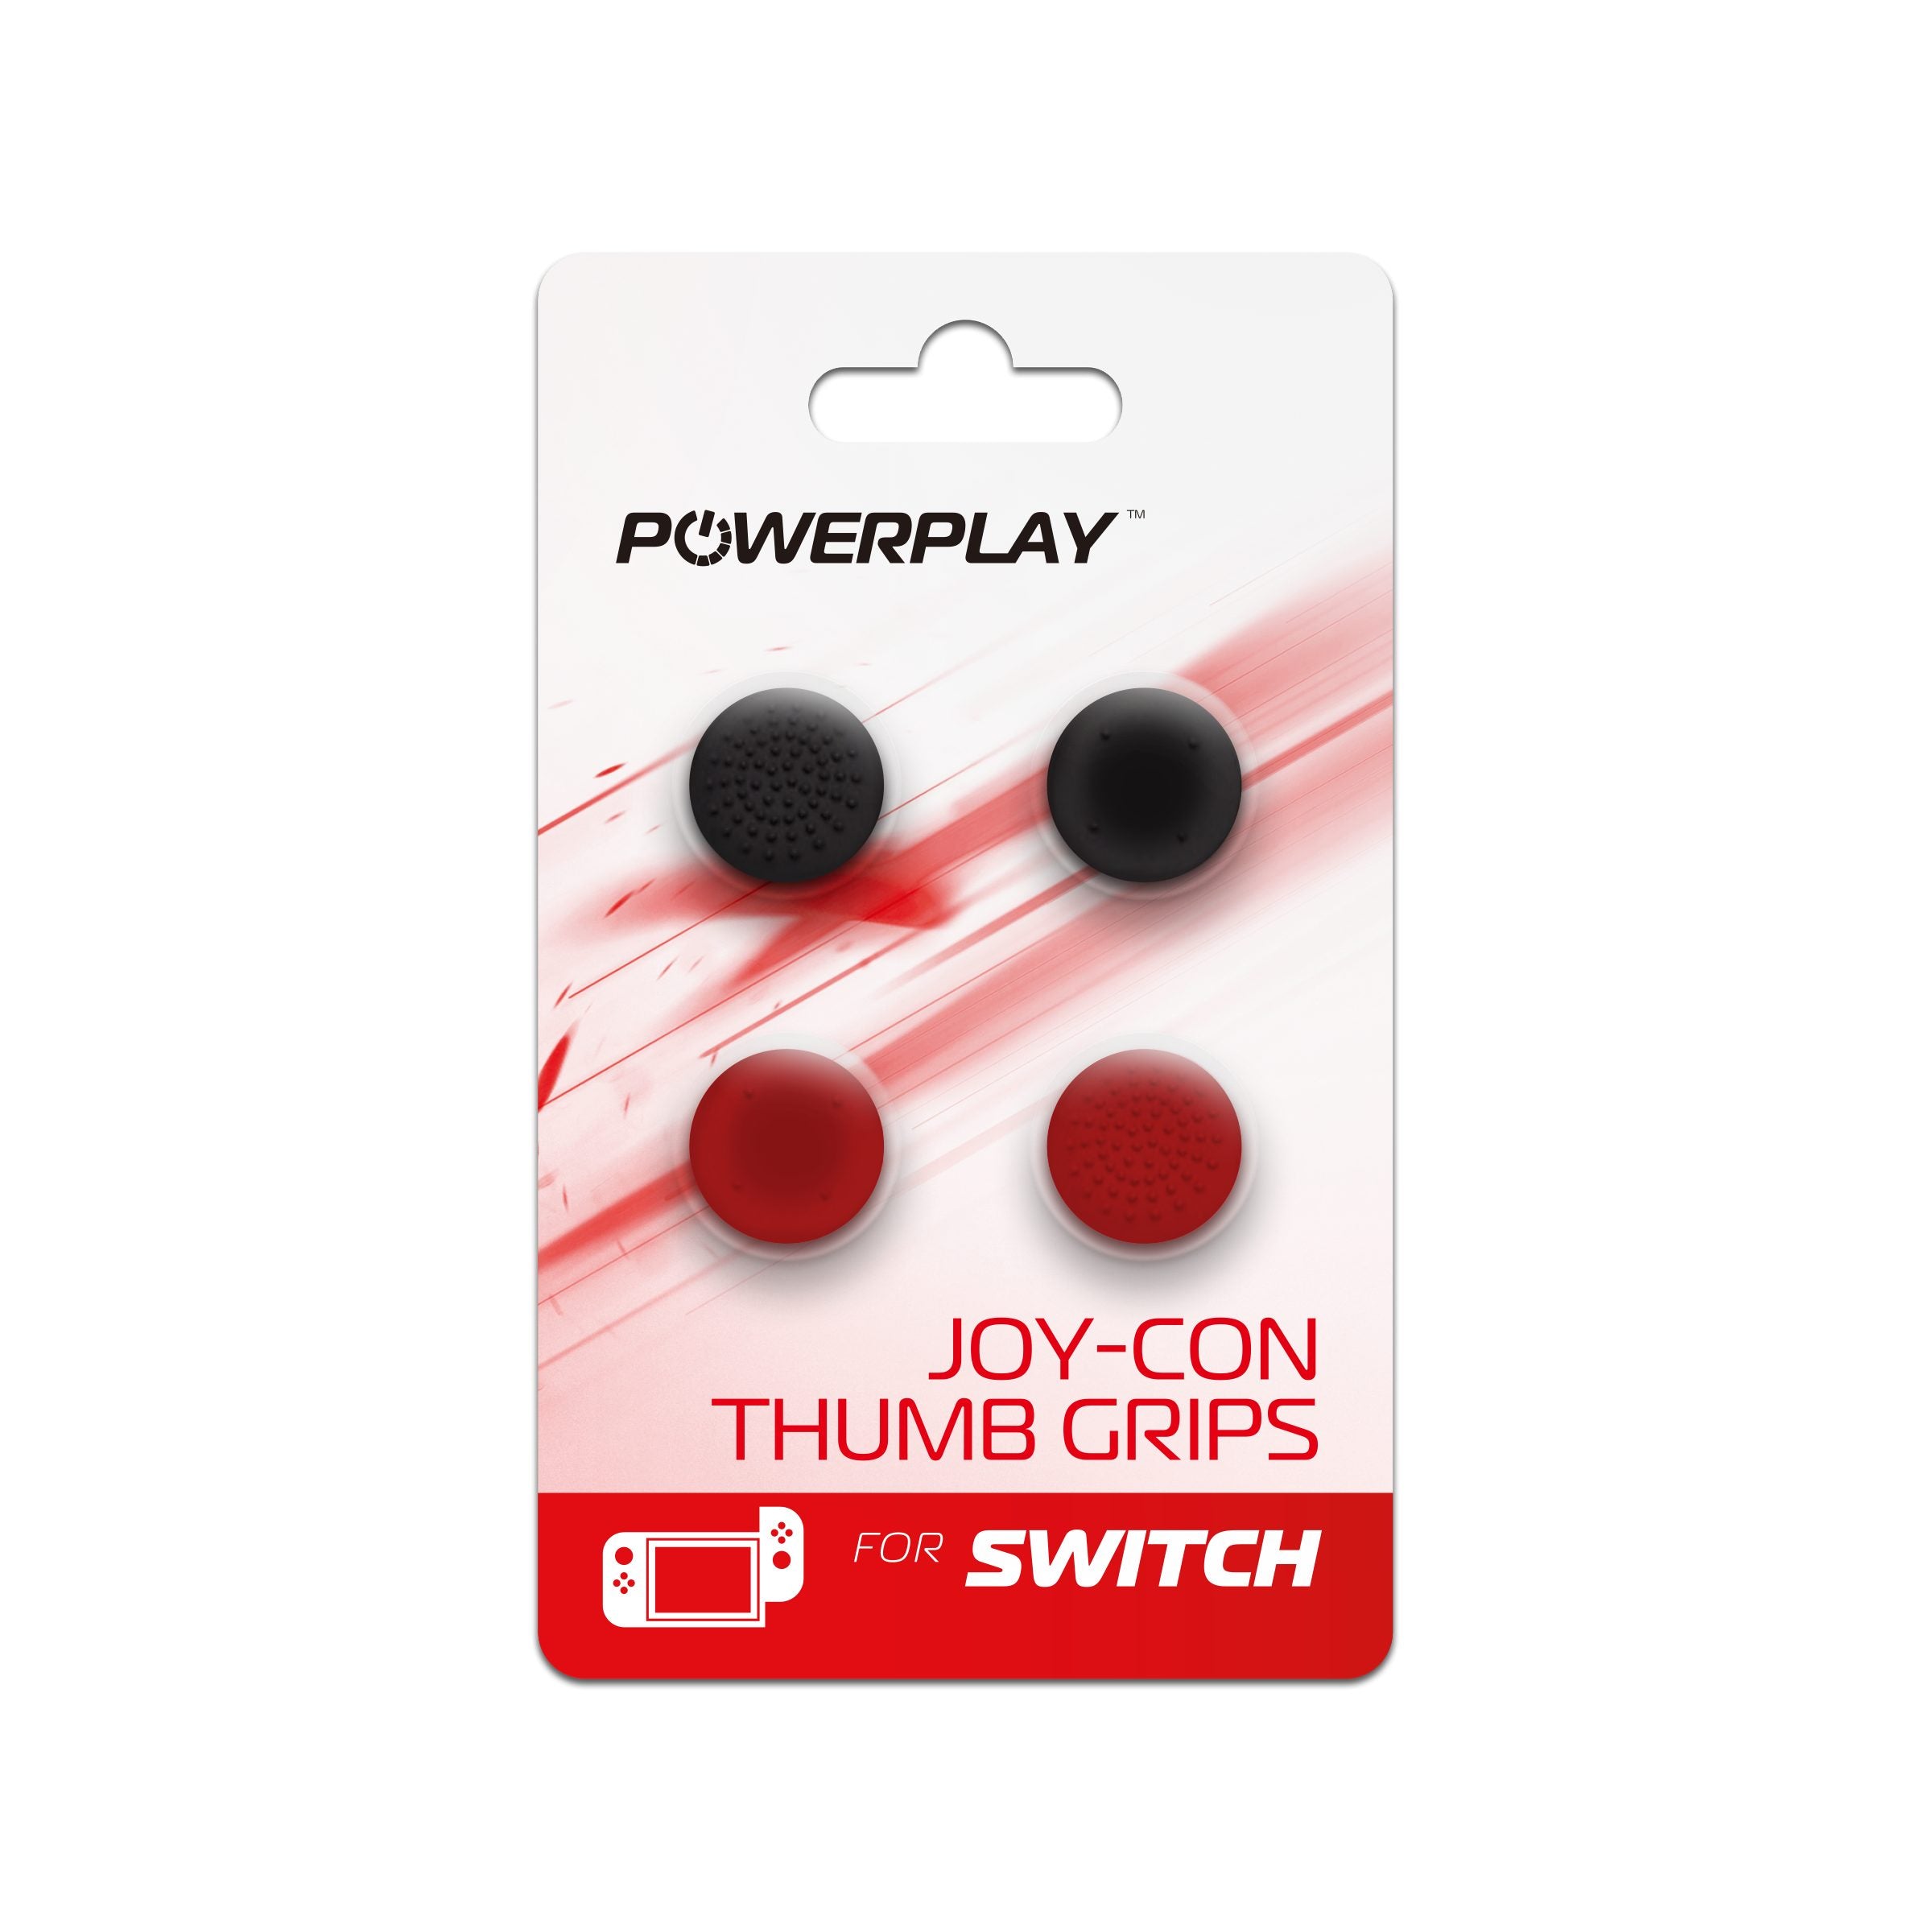 PowerPlay Switch Joy-Con Thumb Grips